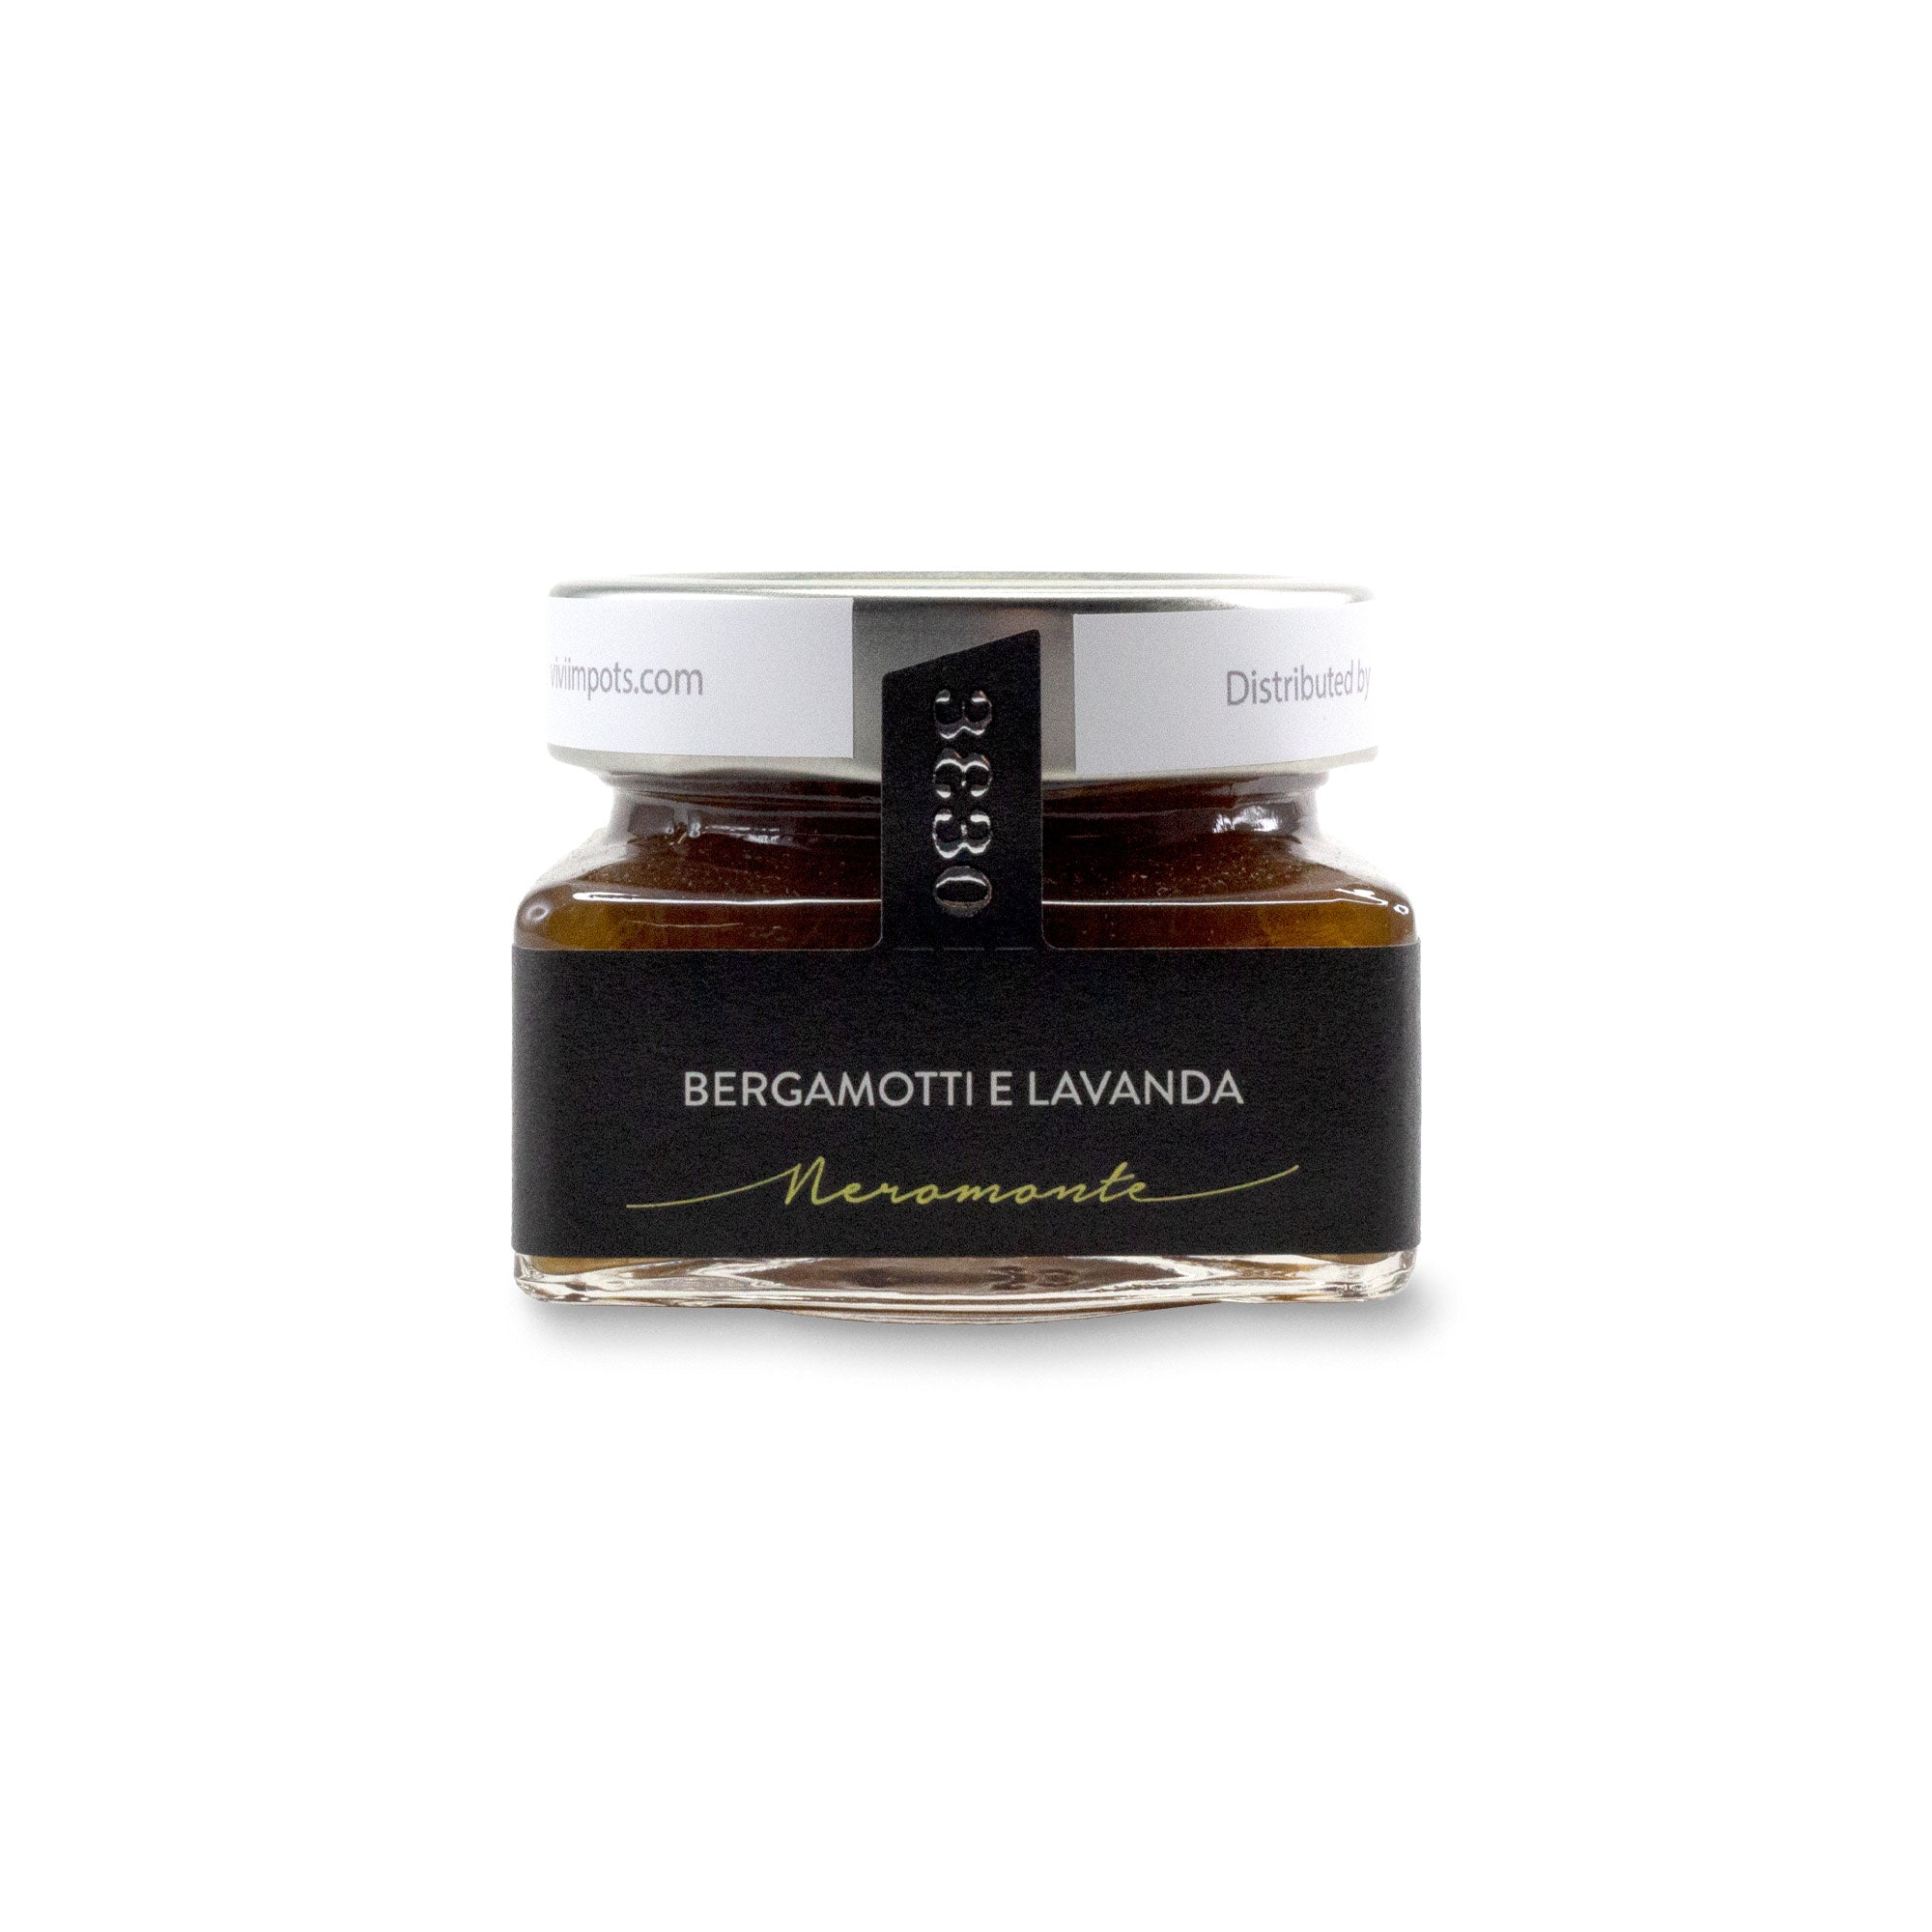 Vivi Imports - Bergamotti E Lavanda (Bergamot and Lavender) Marmalade